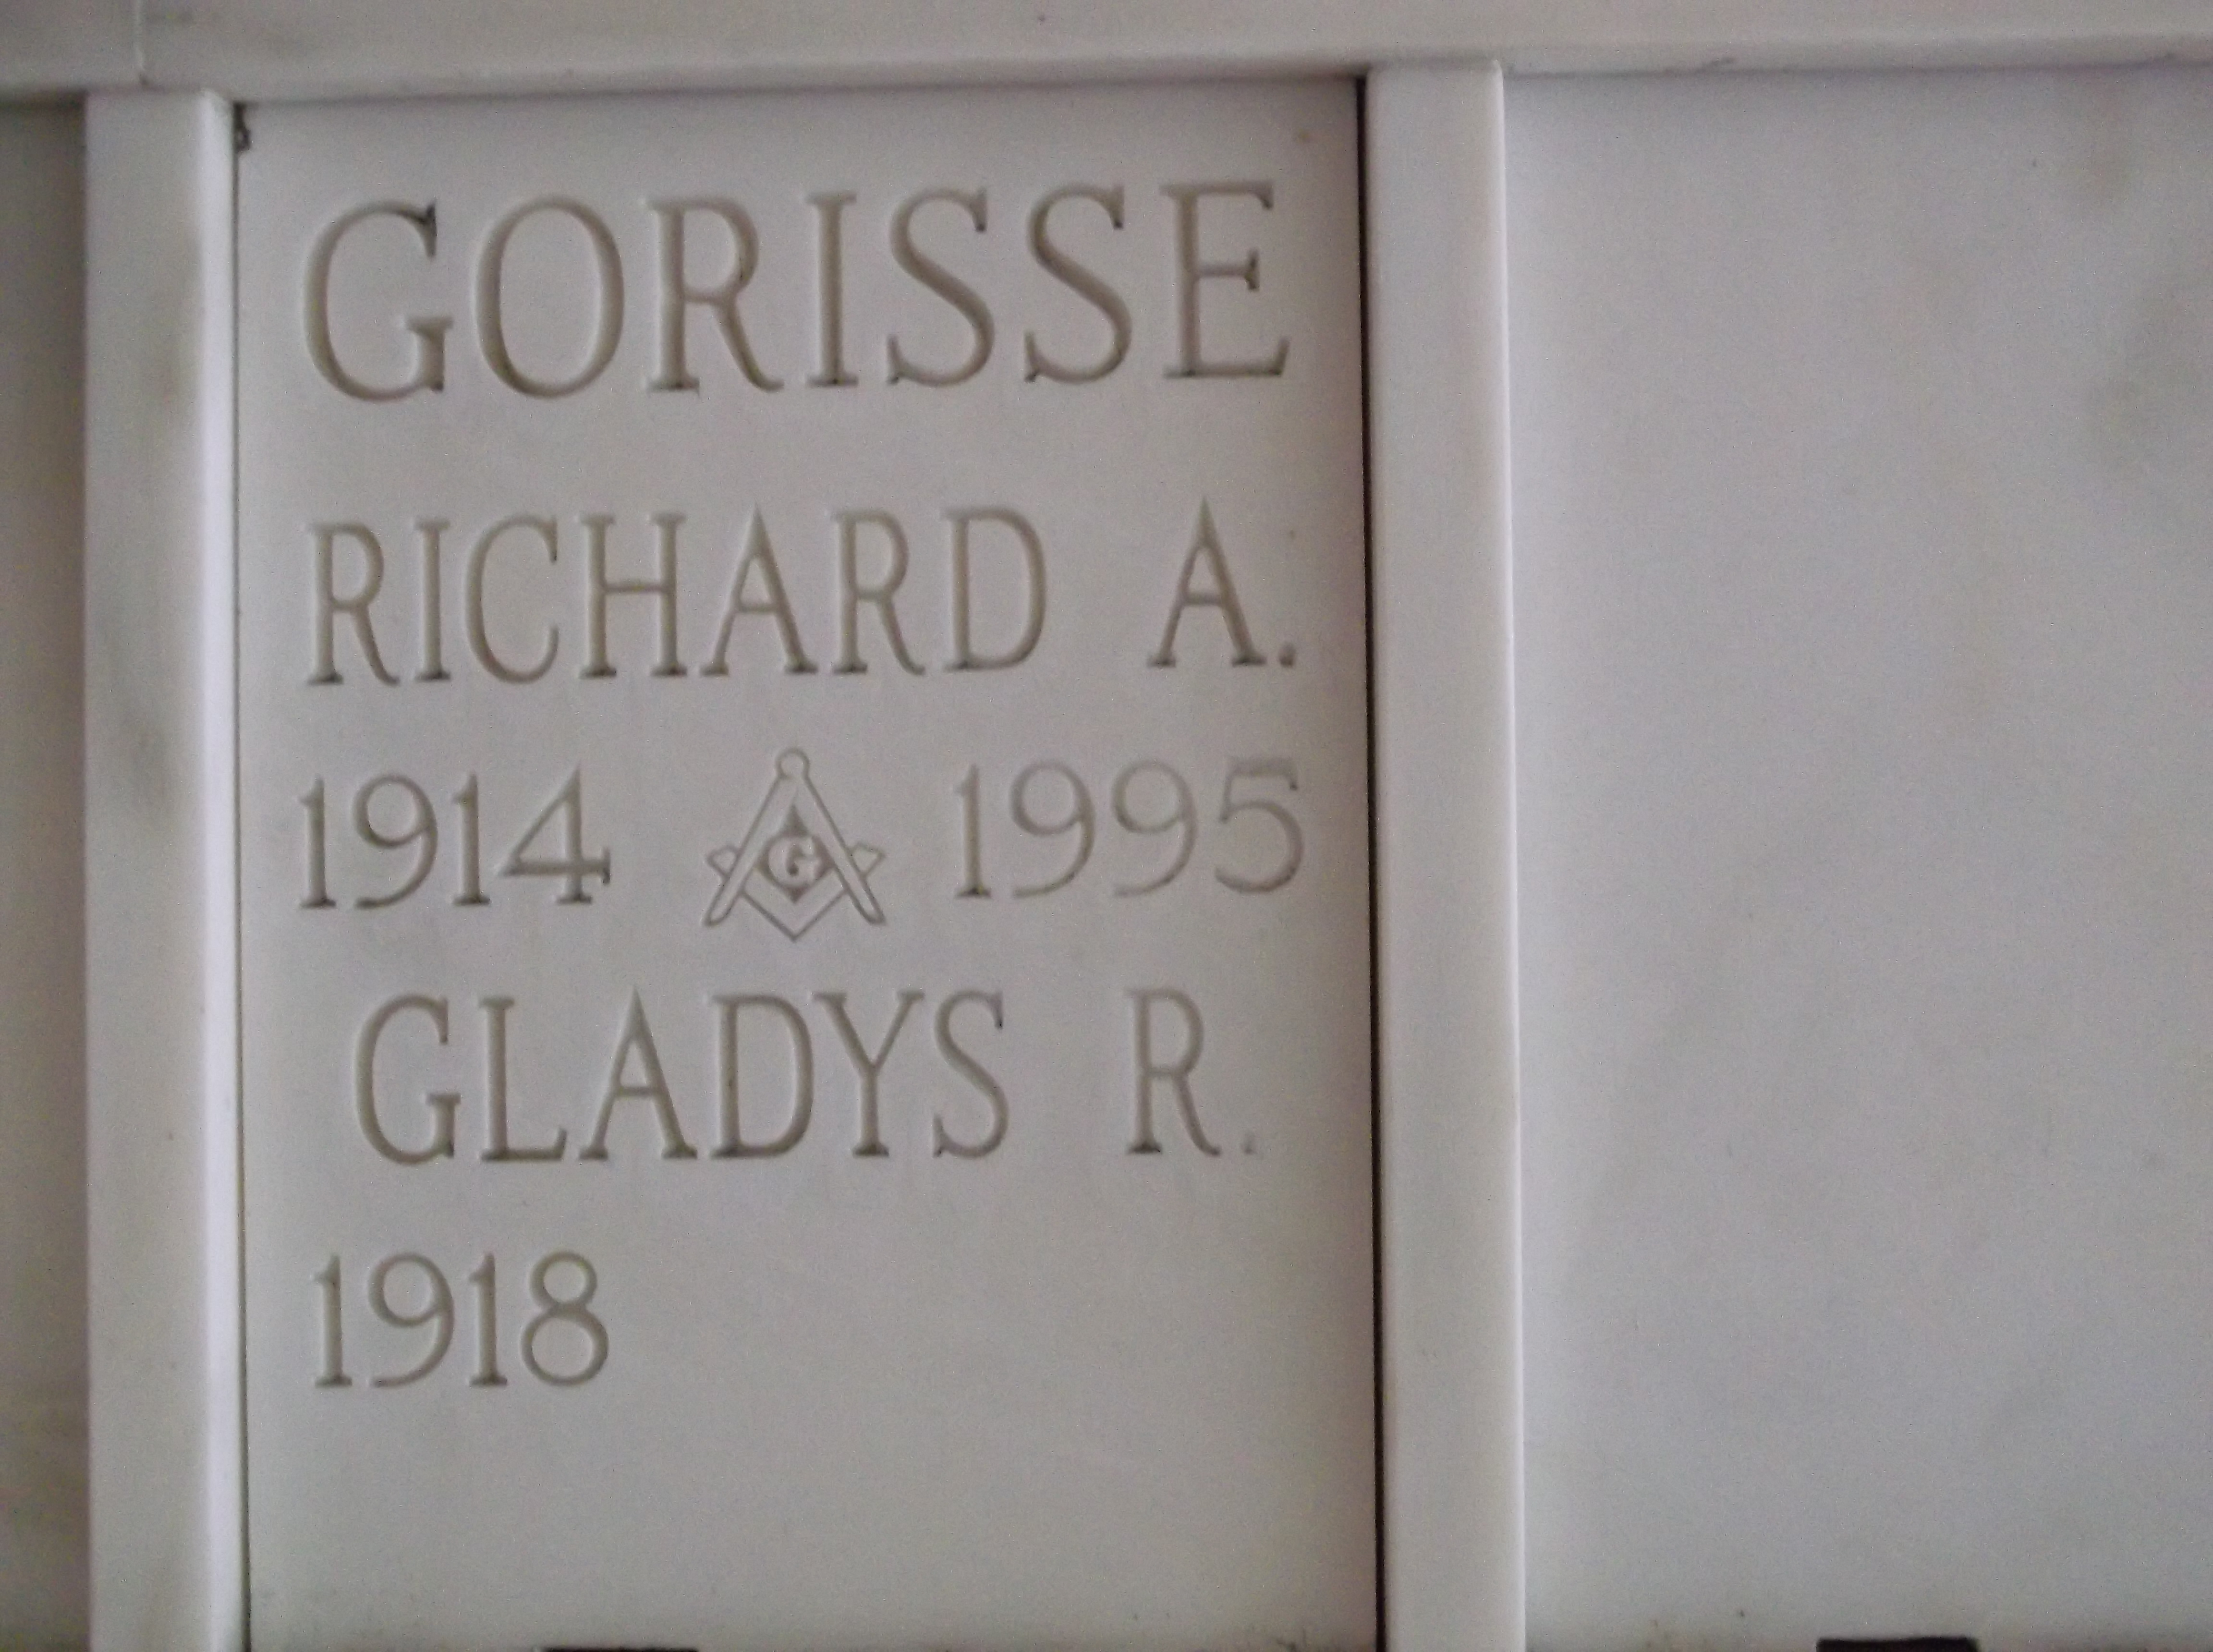 Richard A Gorisse